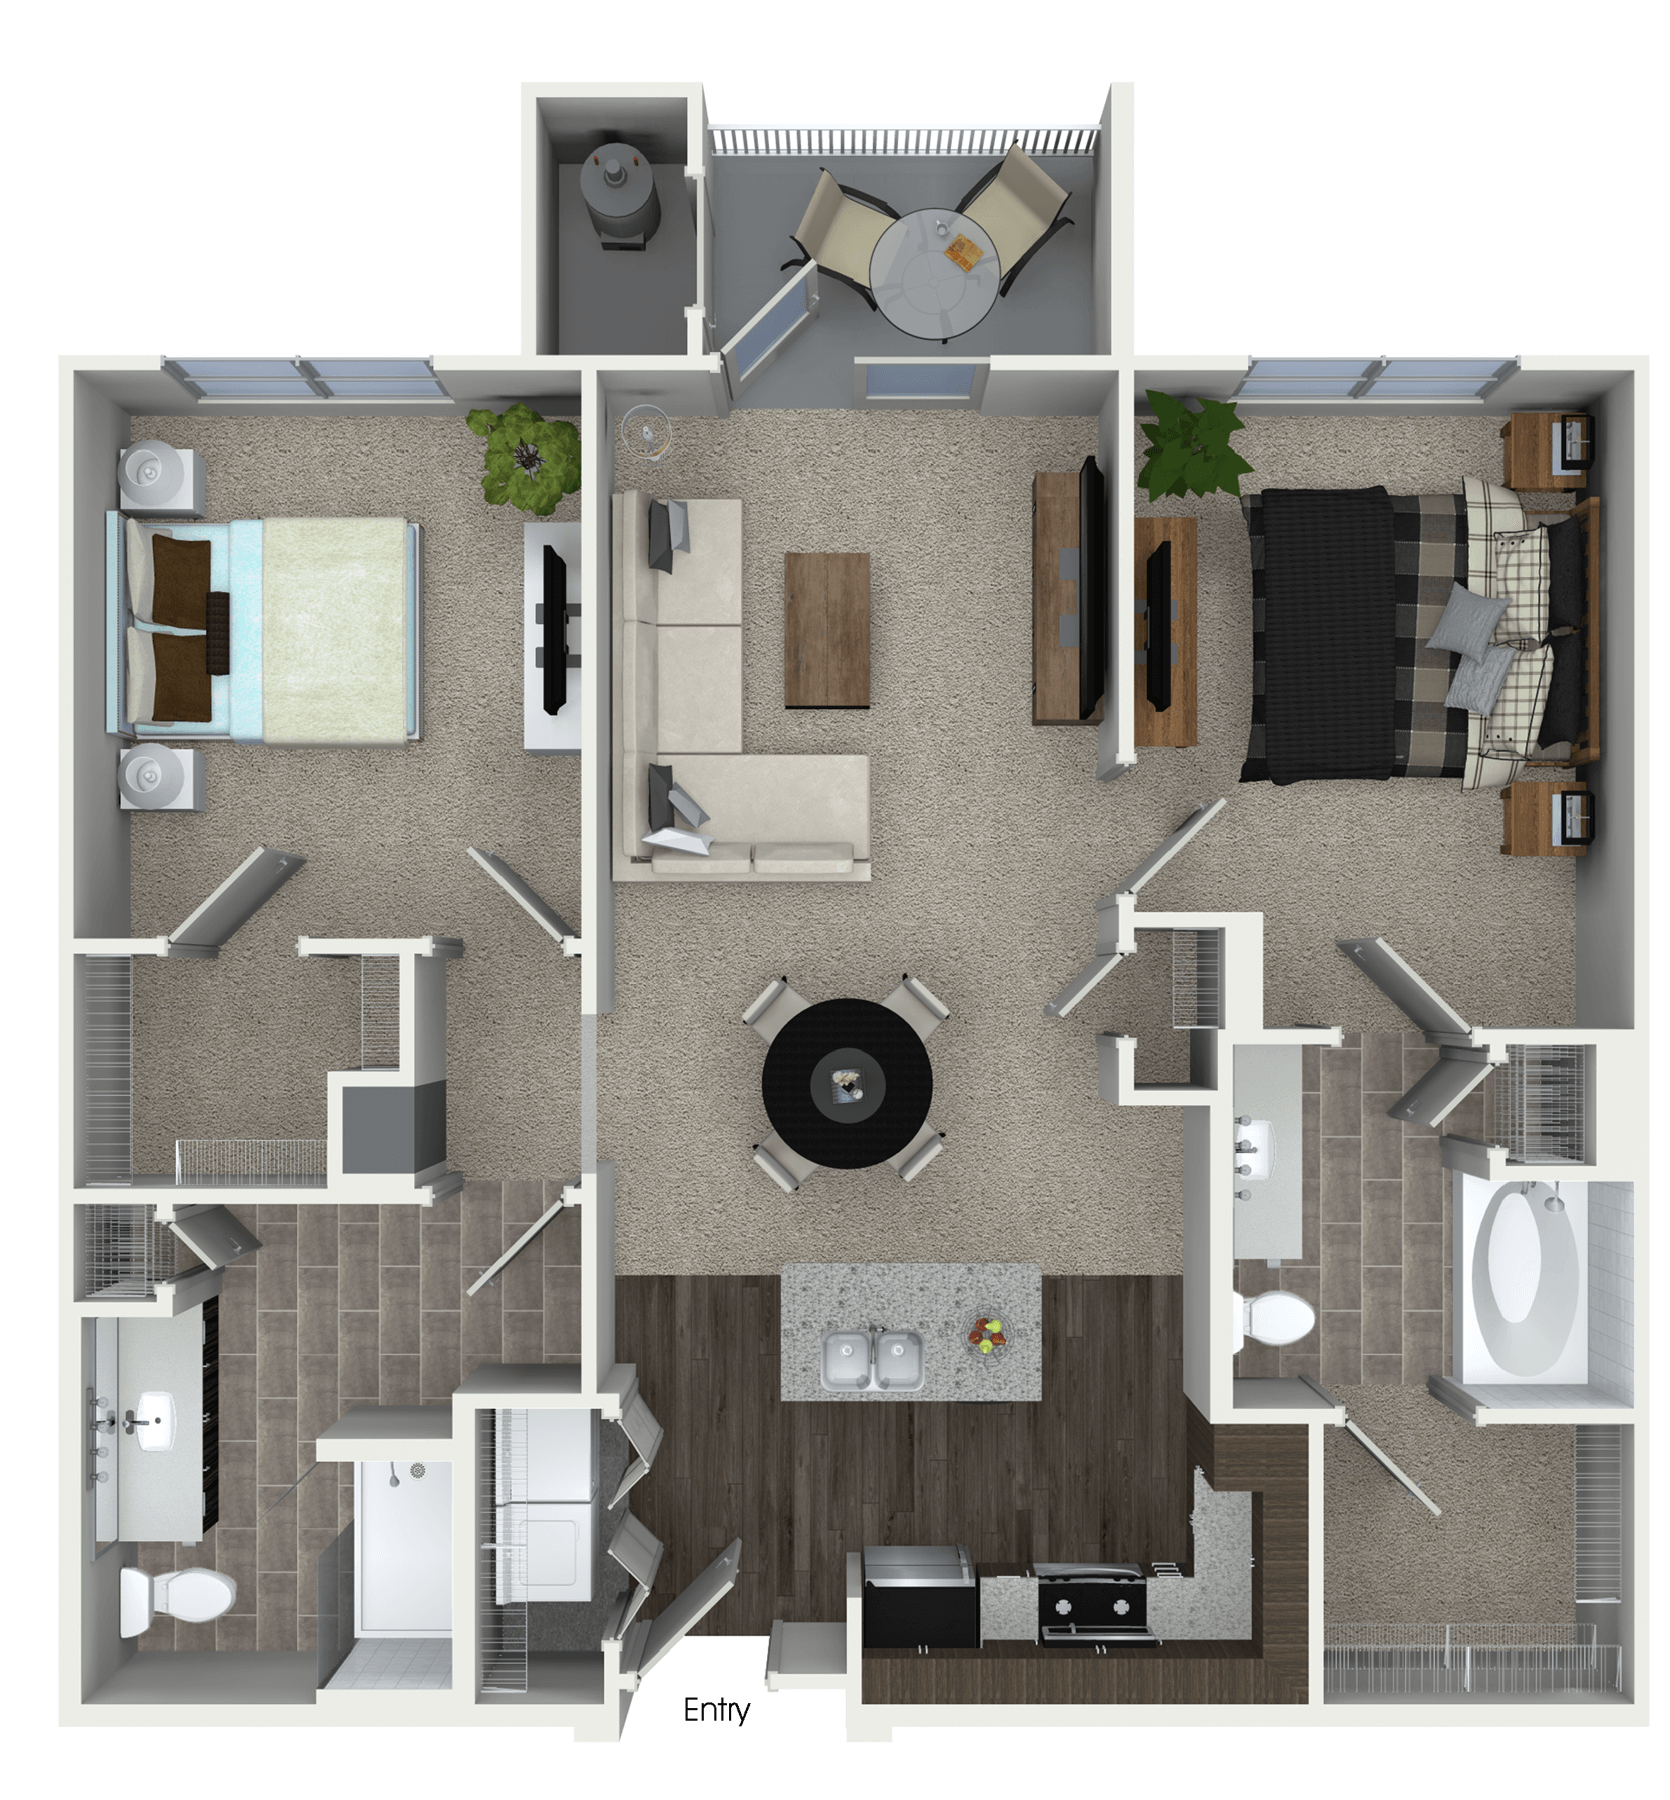 Floorplan for Apartment #3303, 2 bedroom unit at Halstead Marlborough